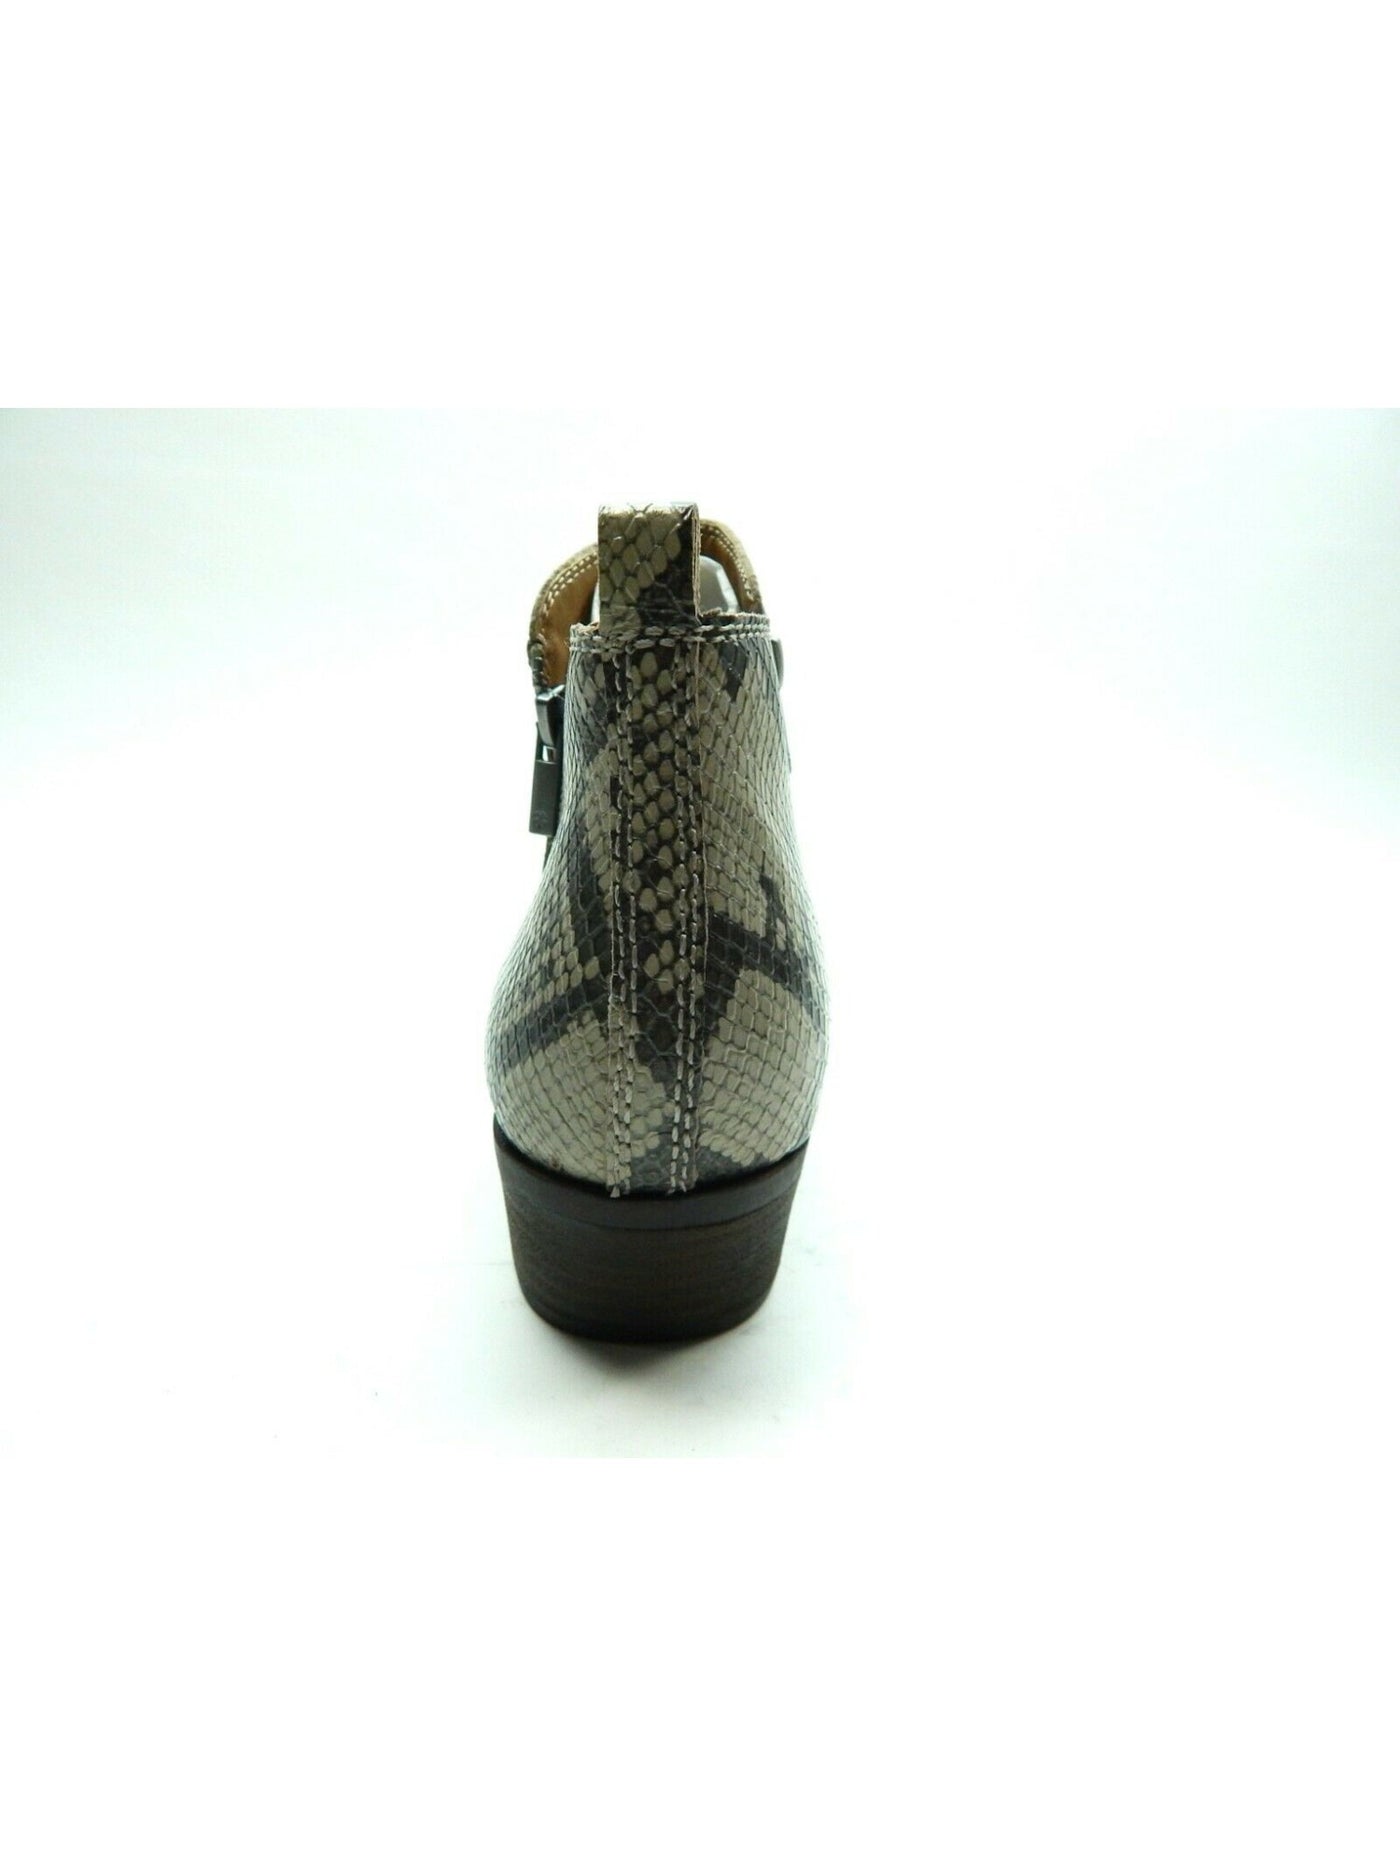 LUCKY BRAND Womens Gray Animal Print H2o Round Toe Stacked Heel Rain Boots 5